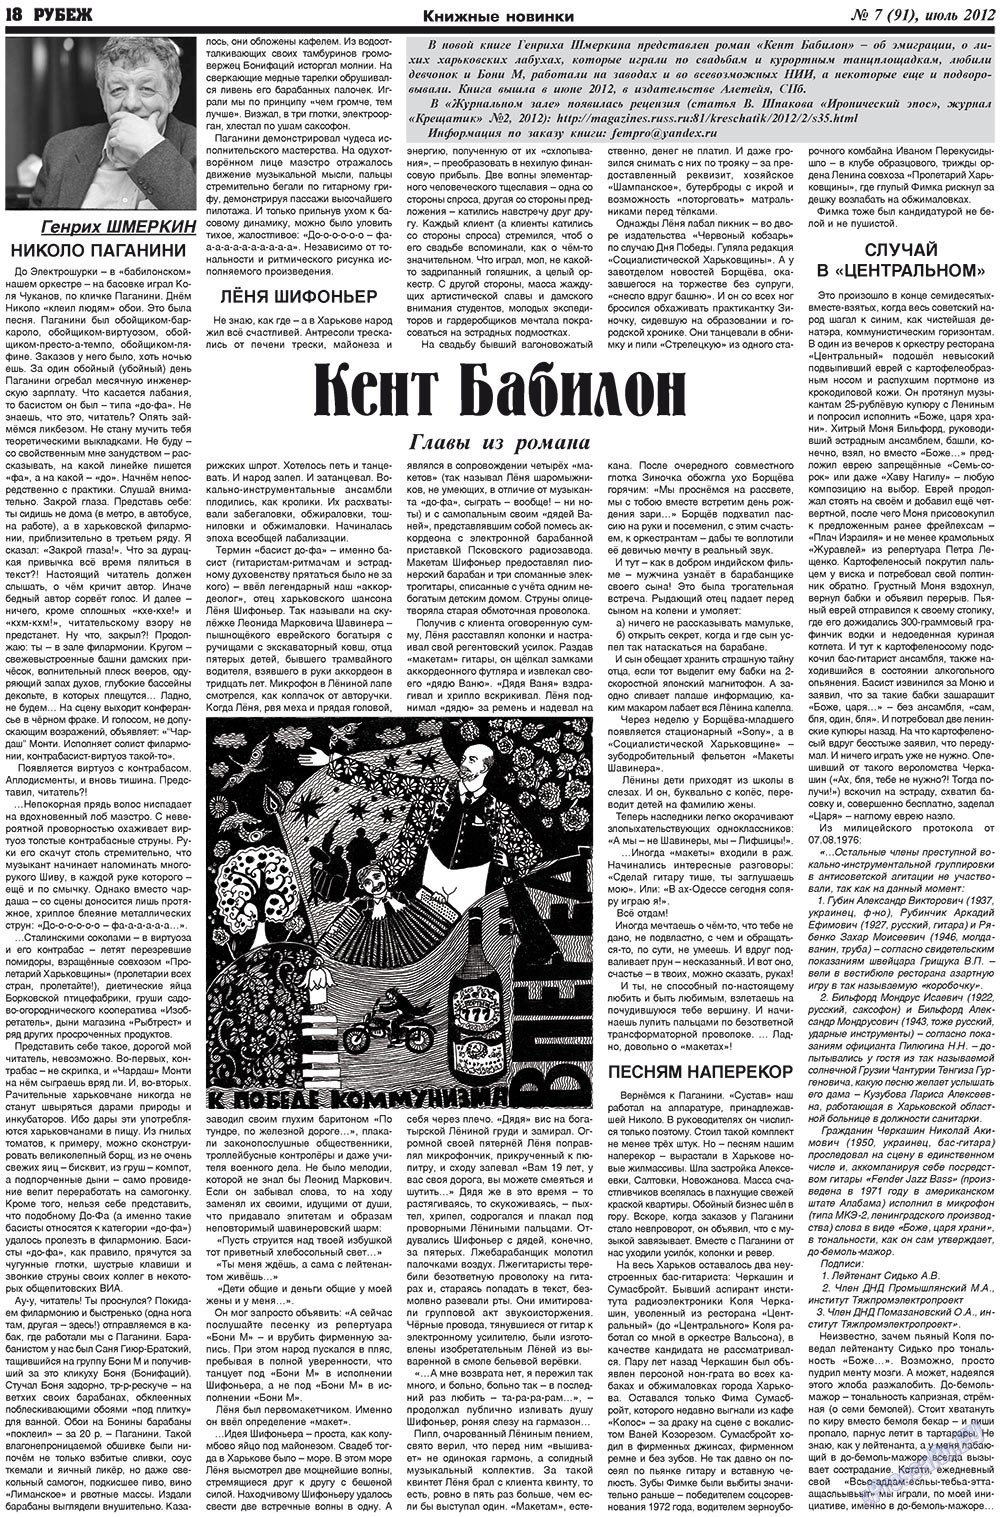 Рубеж, газета. 2012 №7 стр.18